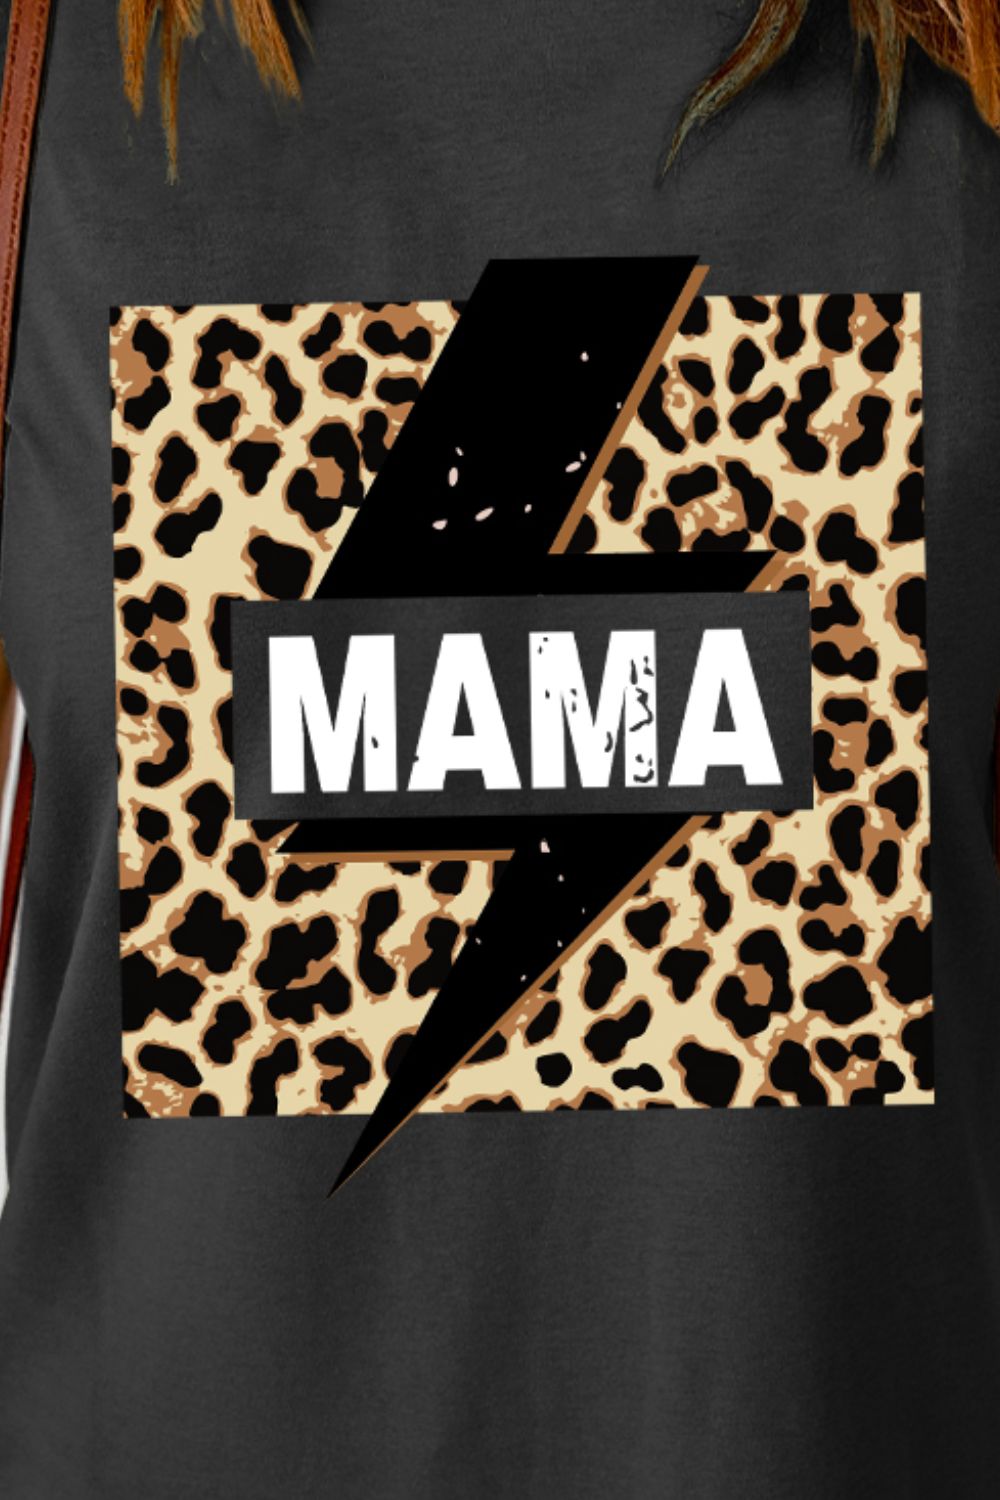 MAMA Leopard Lightning Graphic Tee Shirt